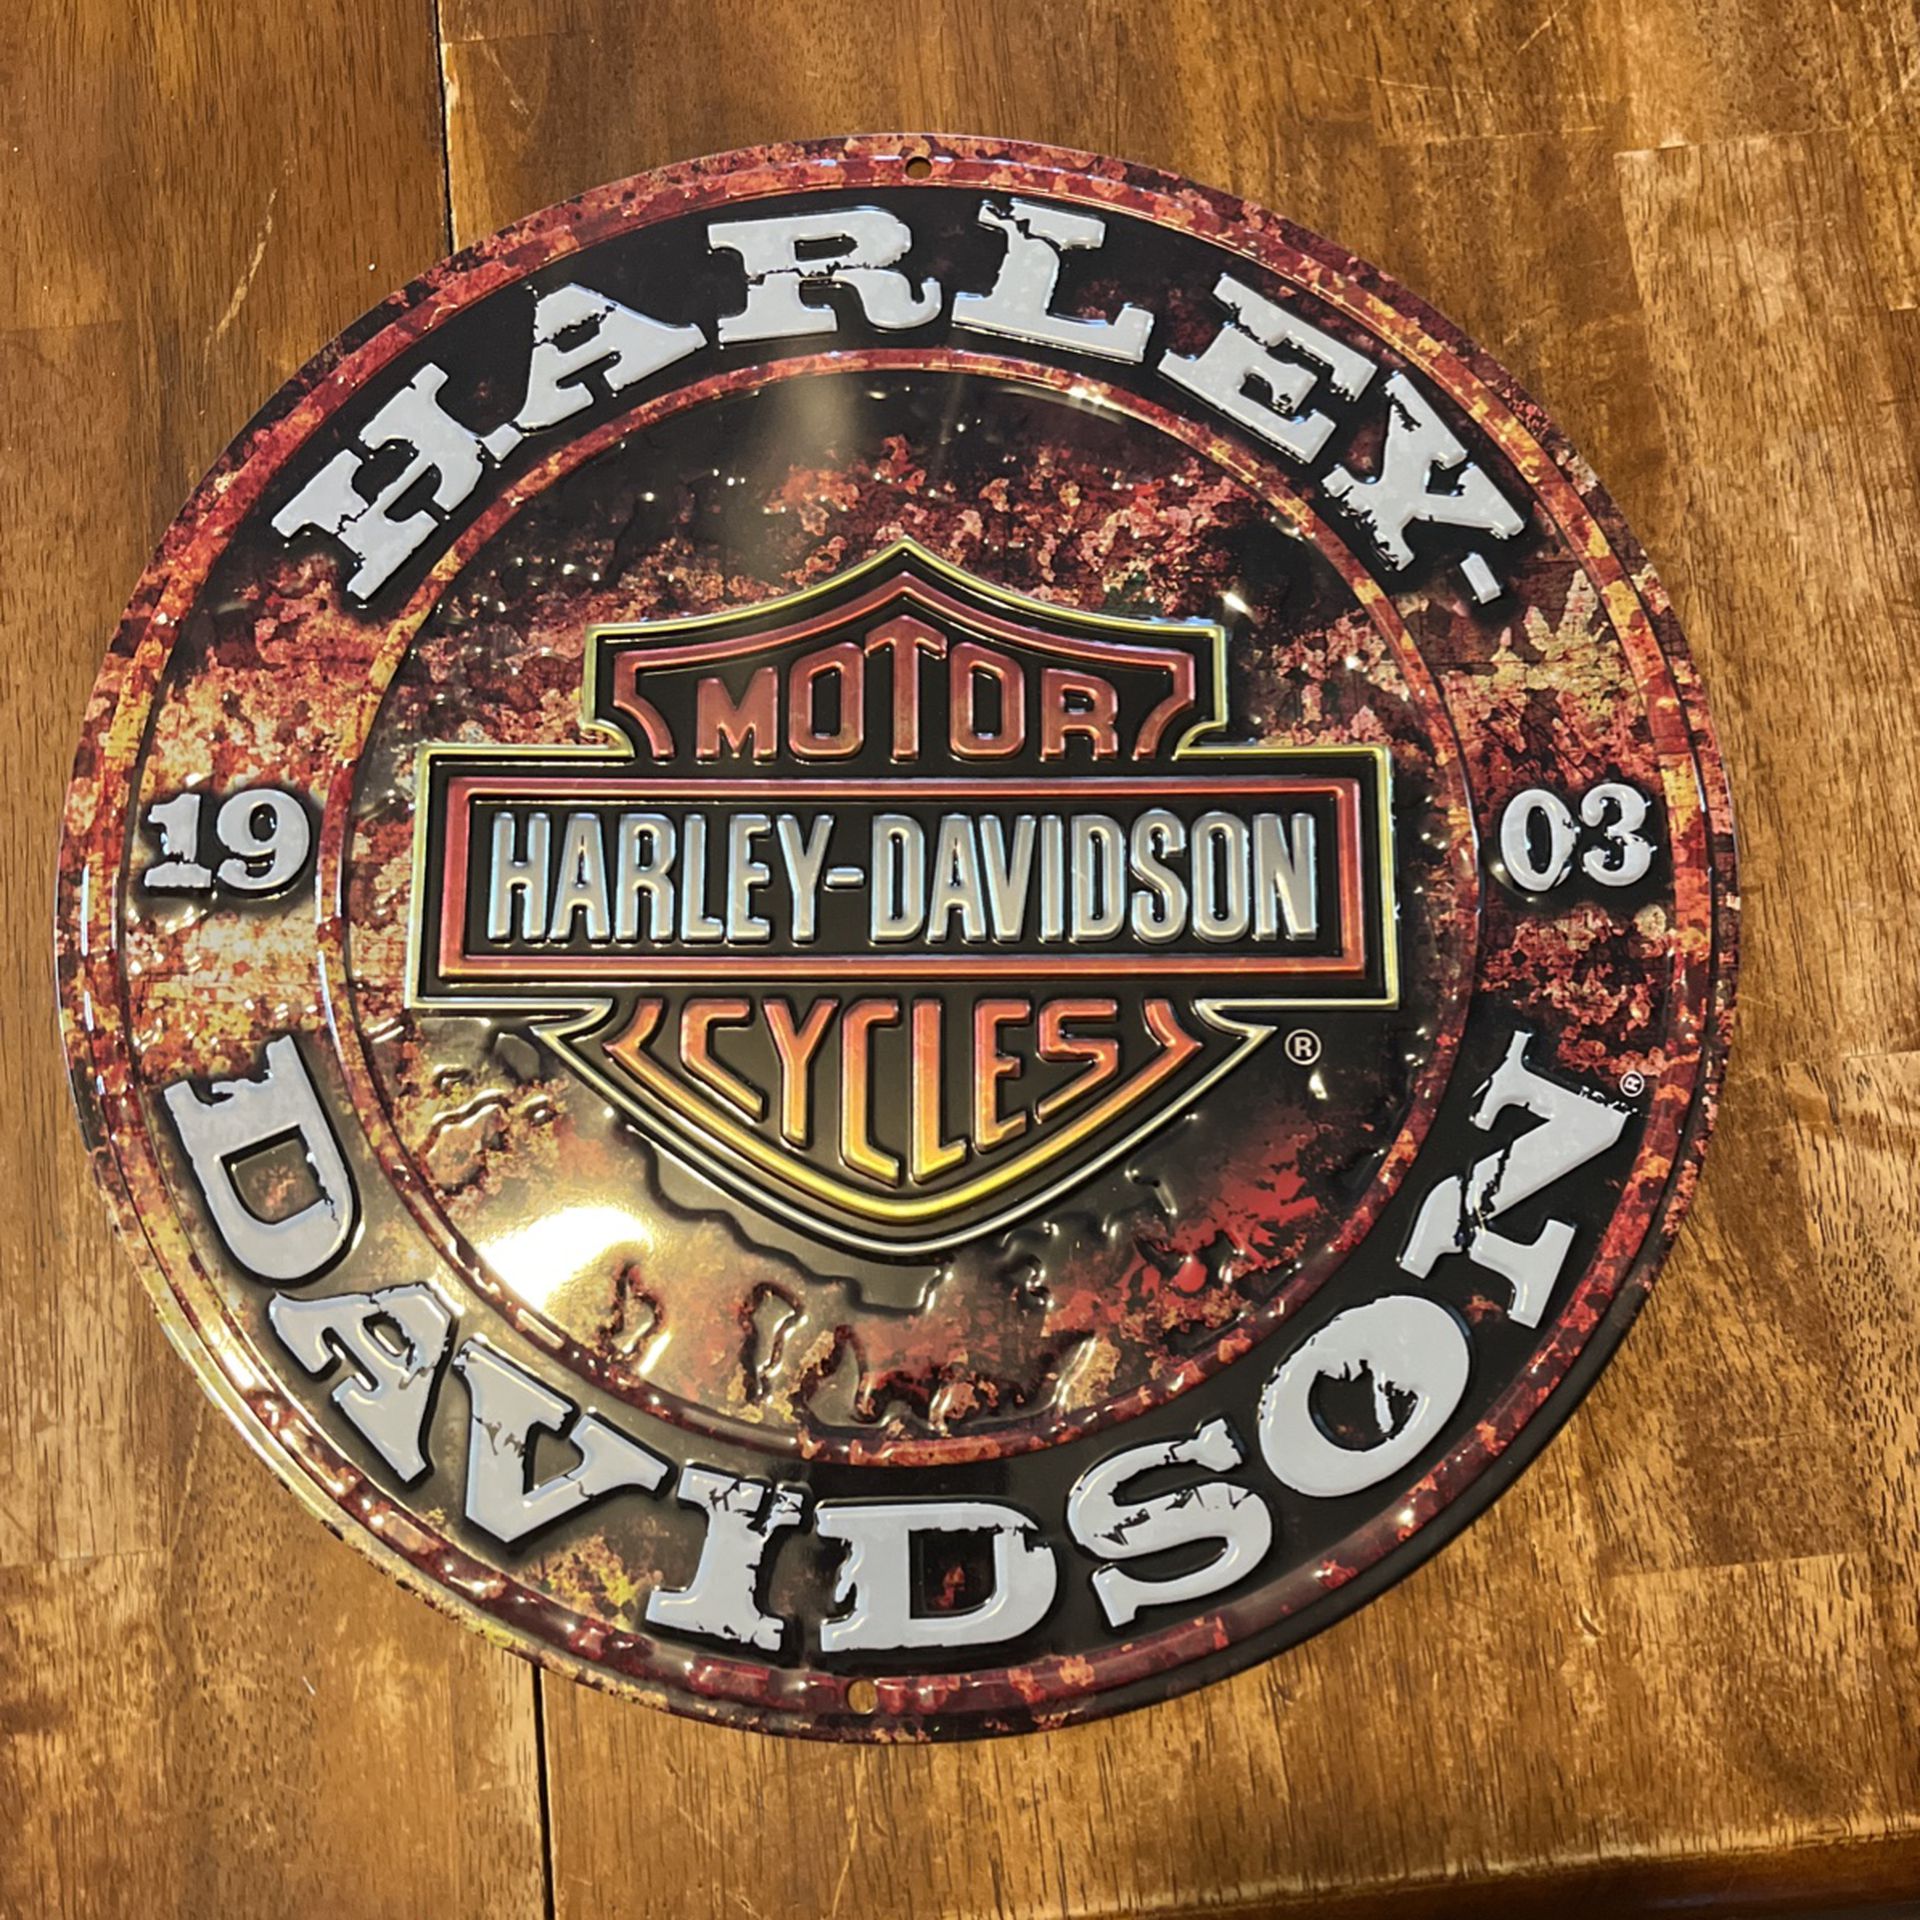 Harley Davidson motor company